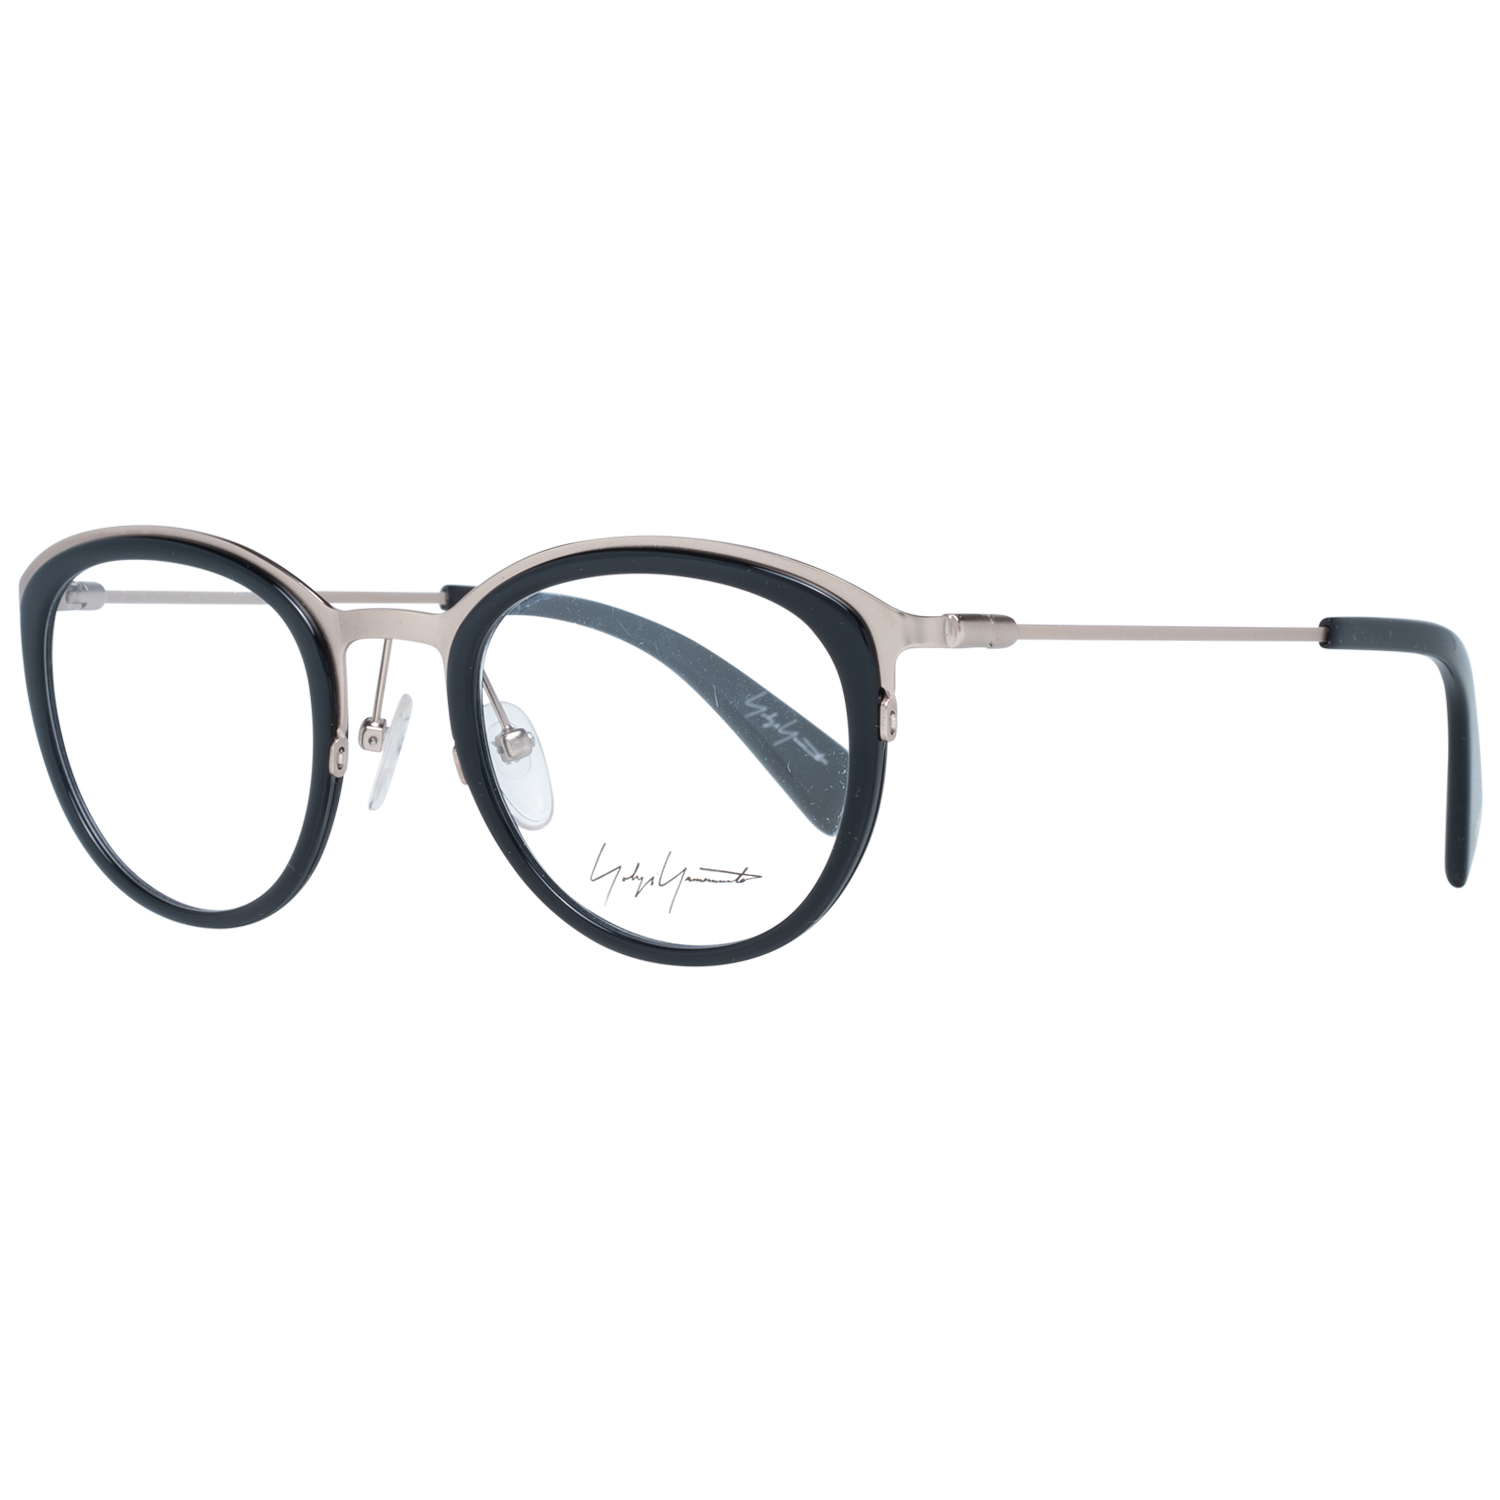 Yohji Yamamoto Frames Yohji Yamamoto Optical Frame YY1023 001 48 Eyeglasses Eyewear UK USA Australia 